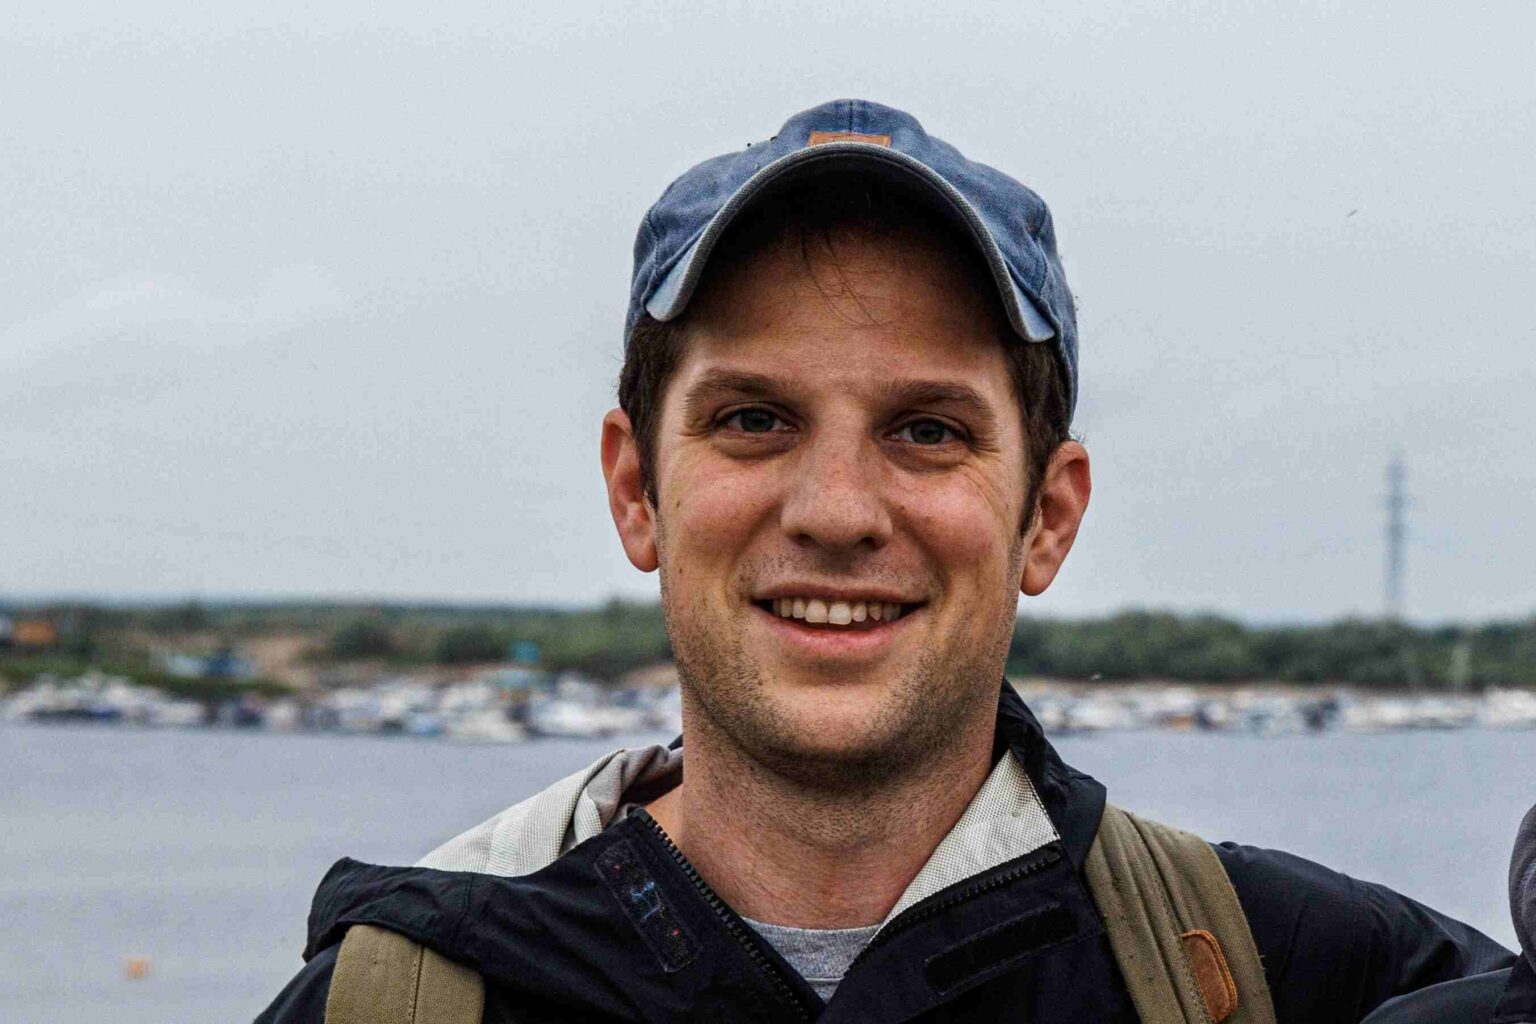 US classifies journalist Evan Gershkovich as ‘wrongfully detained’ by Russia